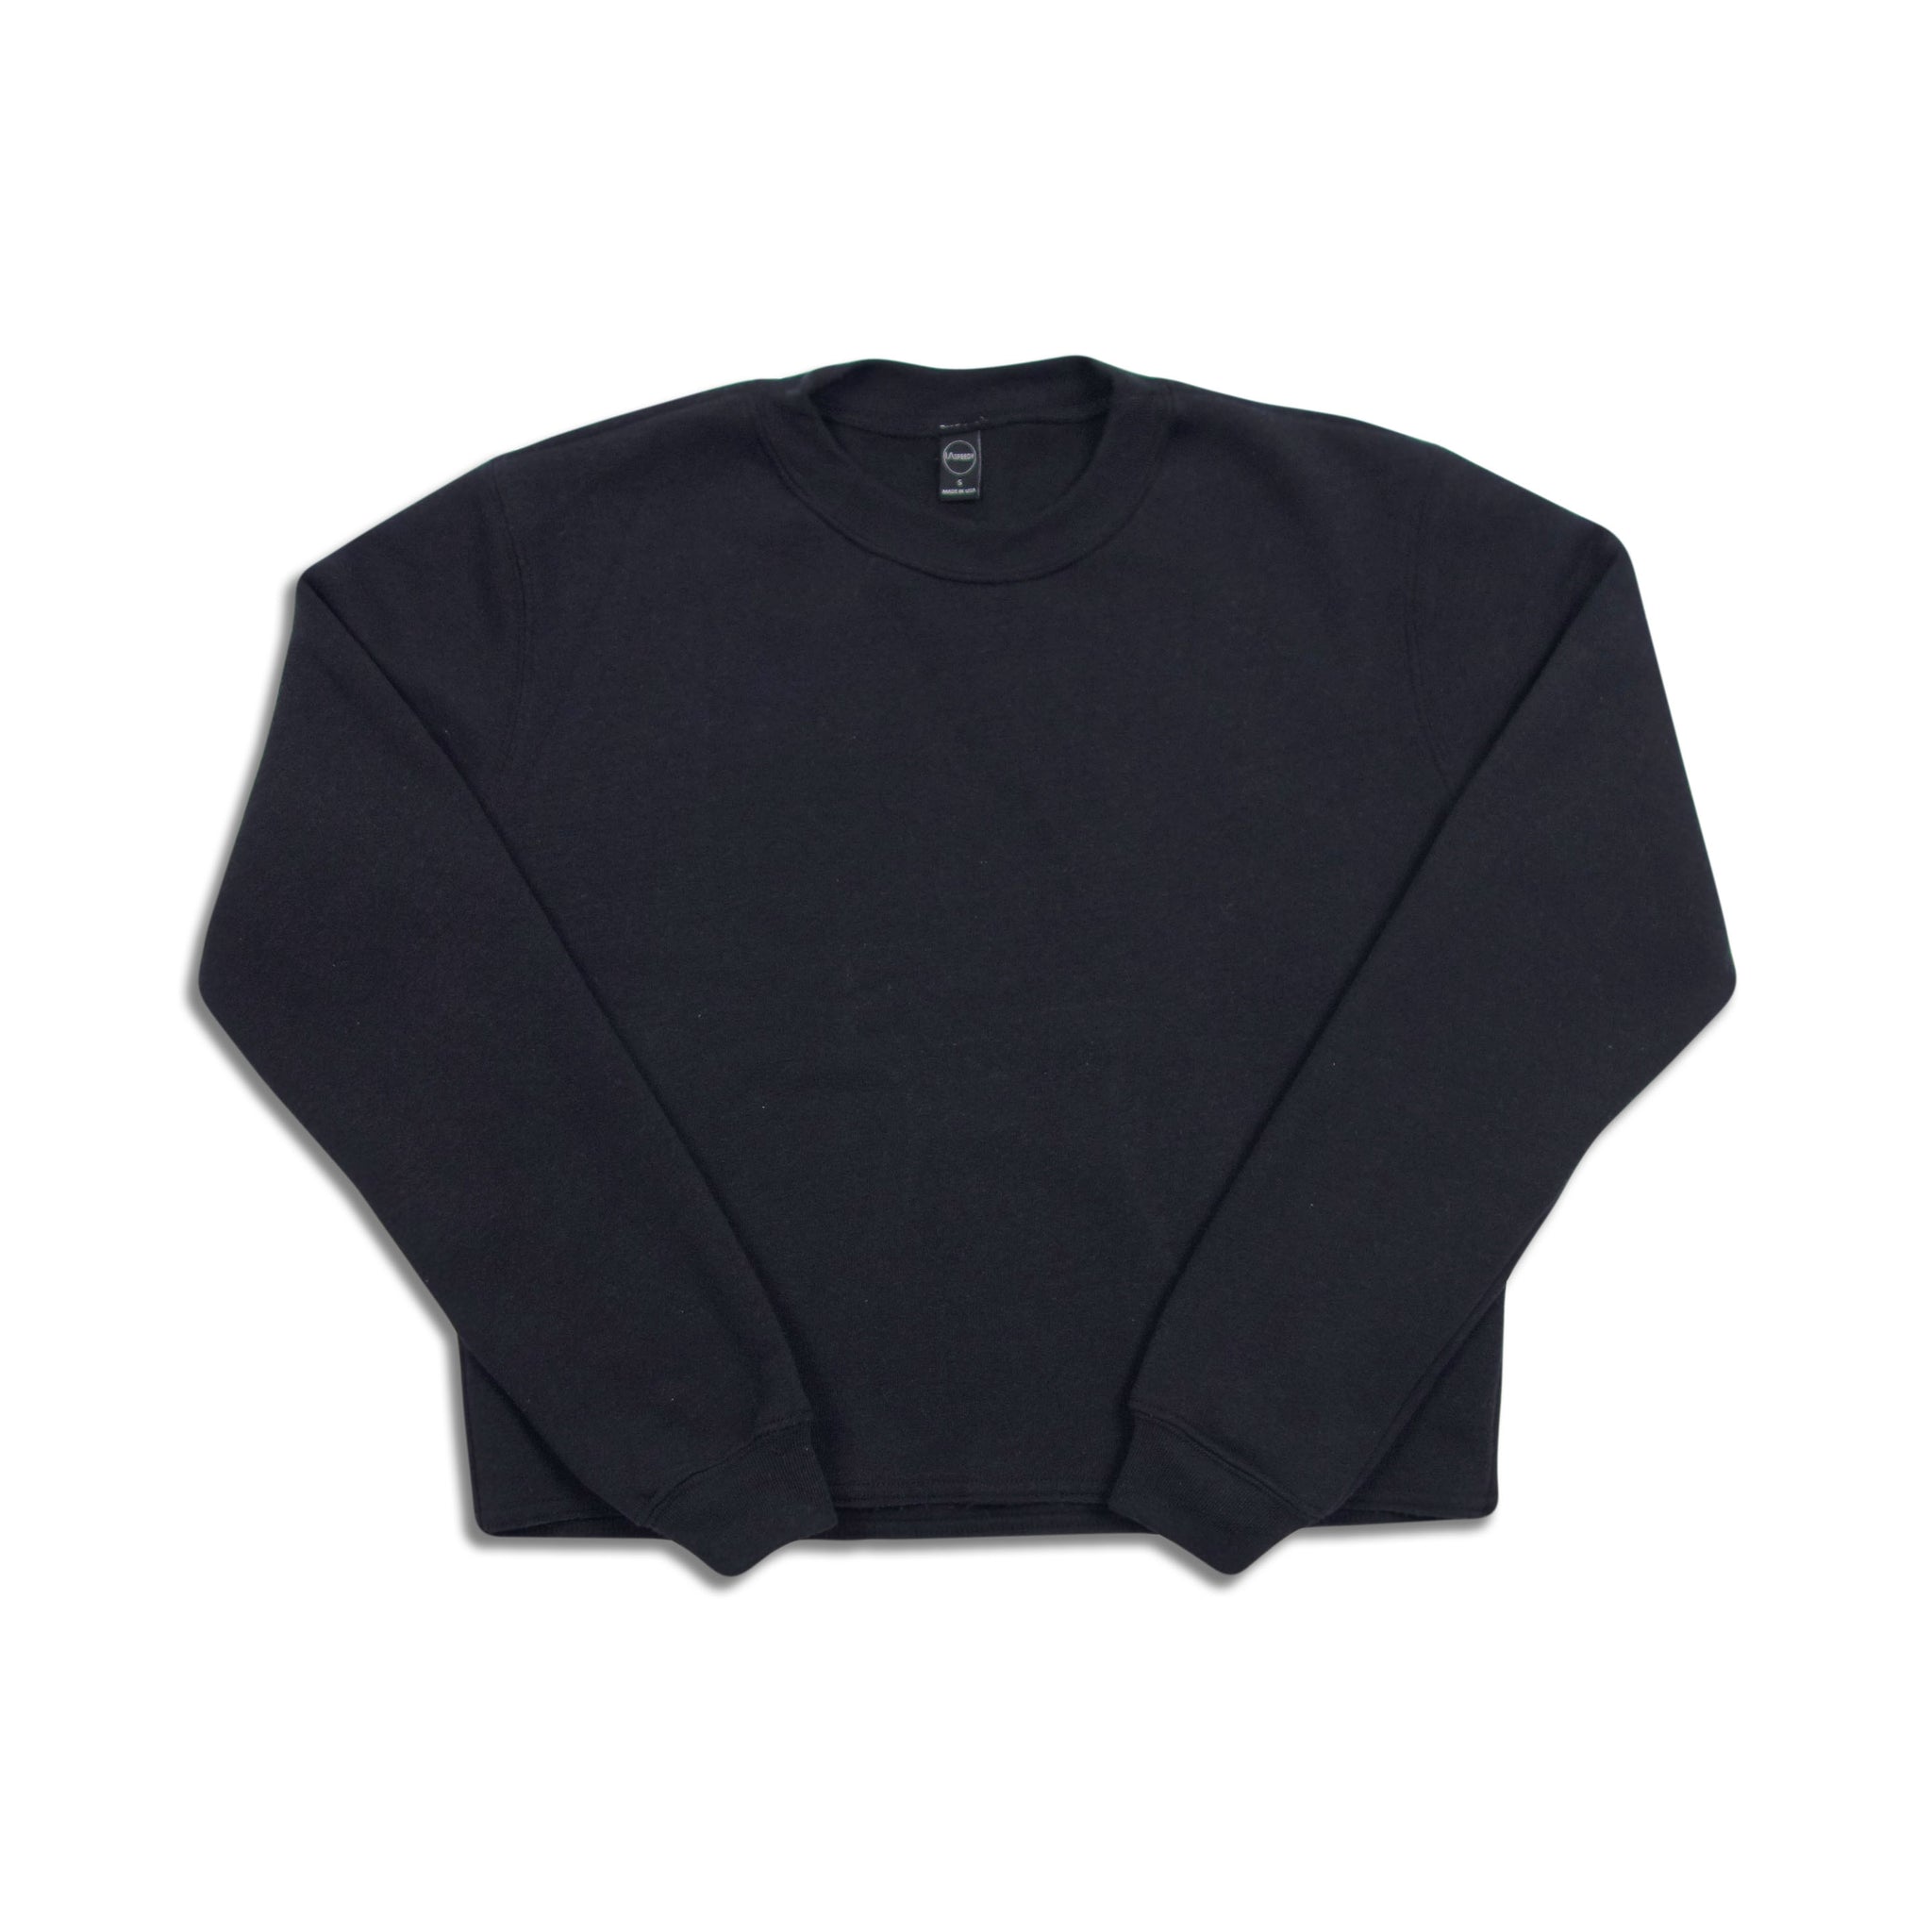 Tri-Blend Fleece Crewneck Sweatshirt Made in USA Black